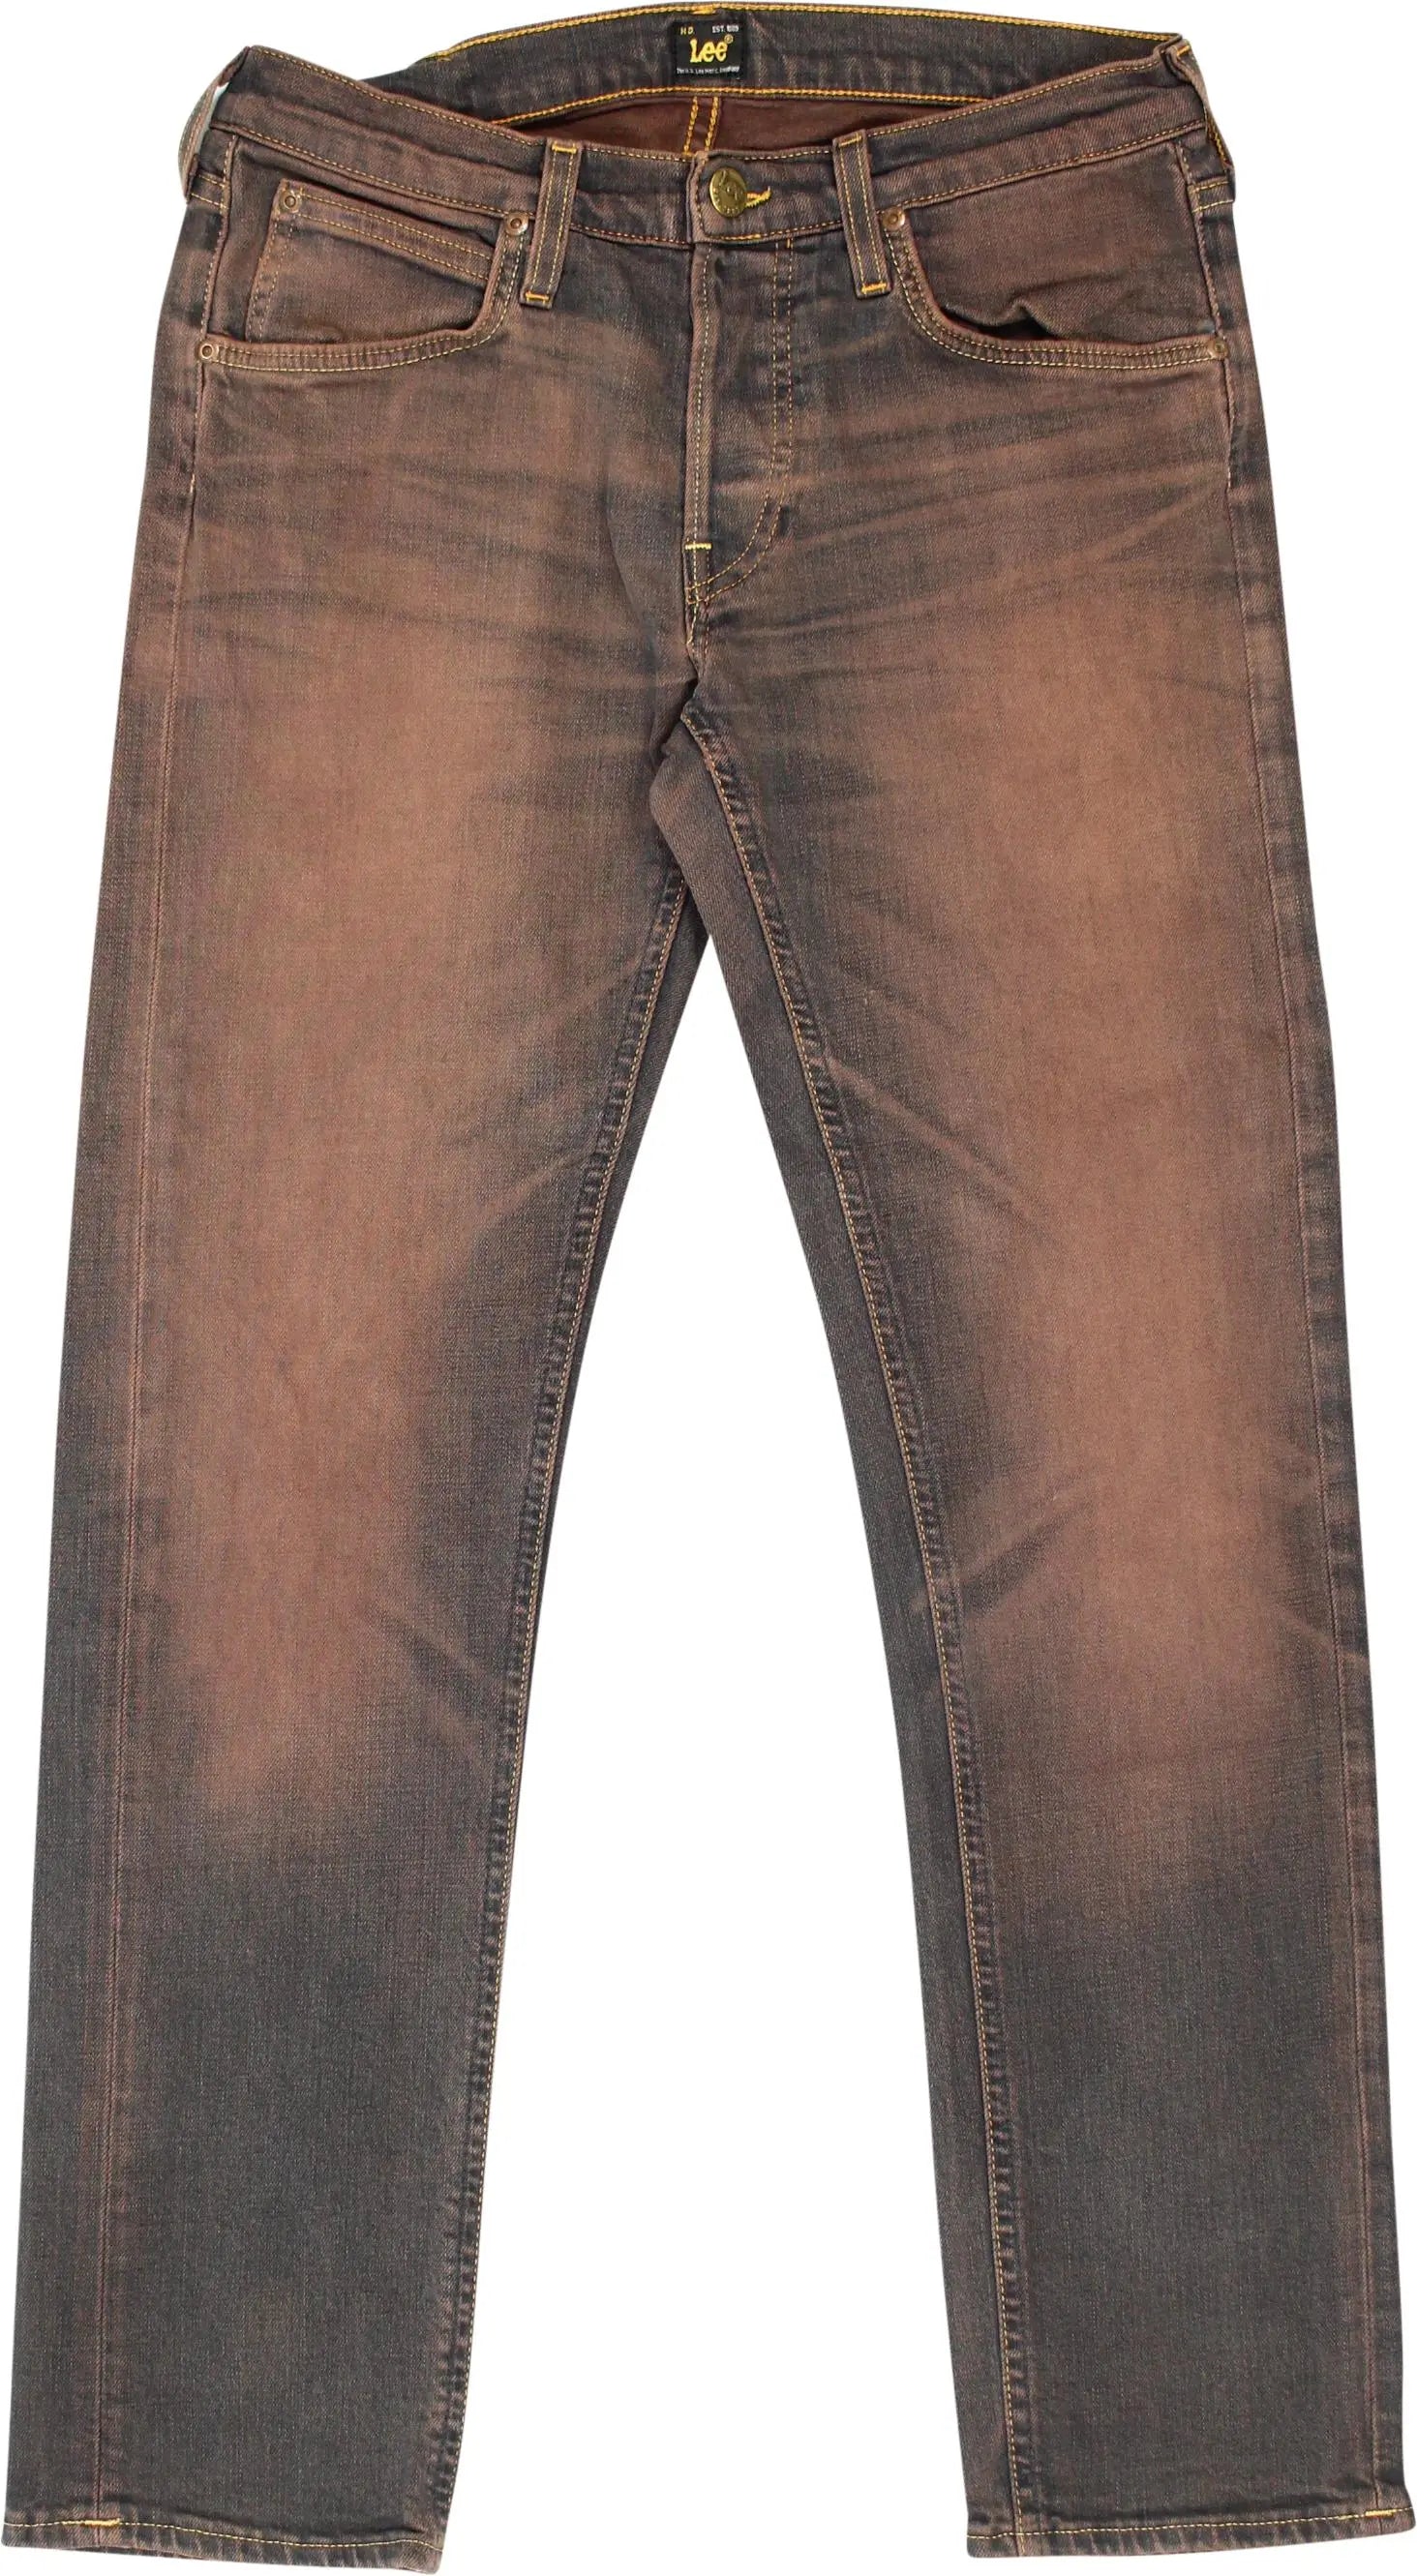 Lee - Lee Daren Slim Fit Jeans- ThriftTale.com - Vintage and second handclothing